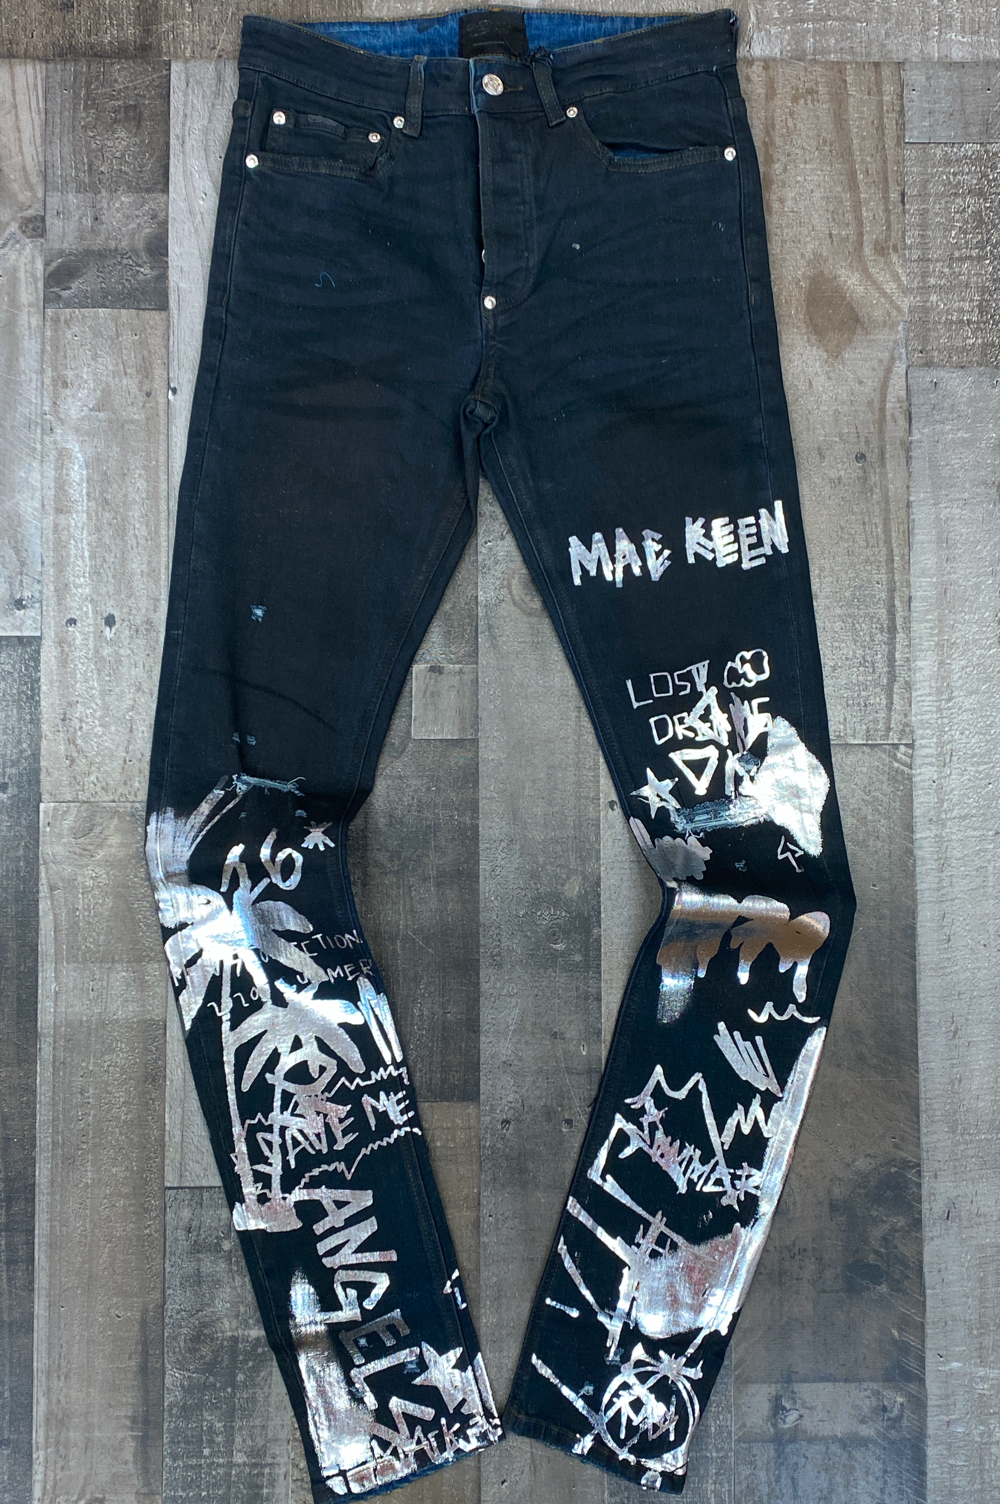 Mackeen- Aaron metallic silver printed jeans